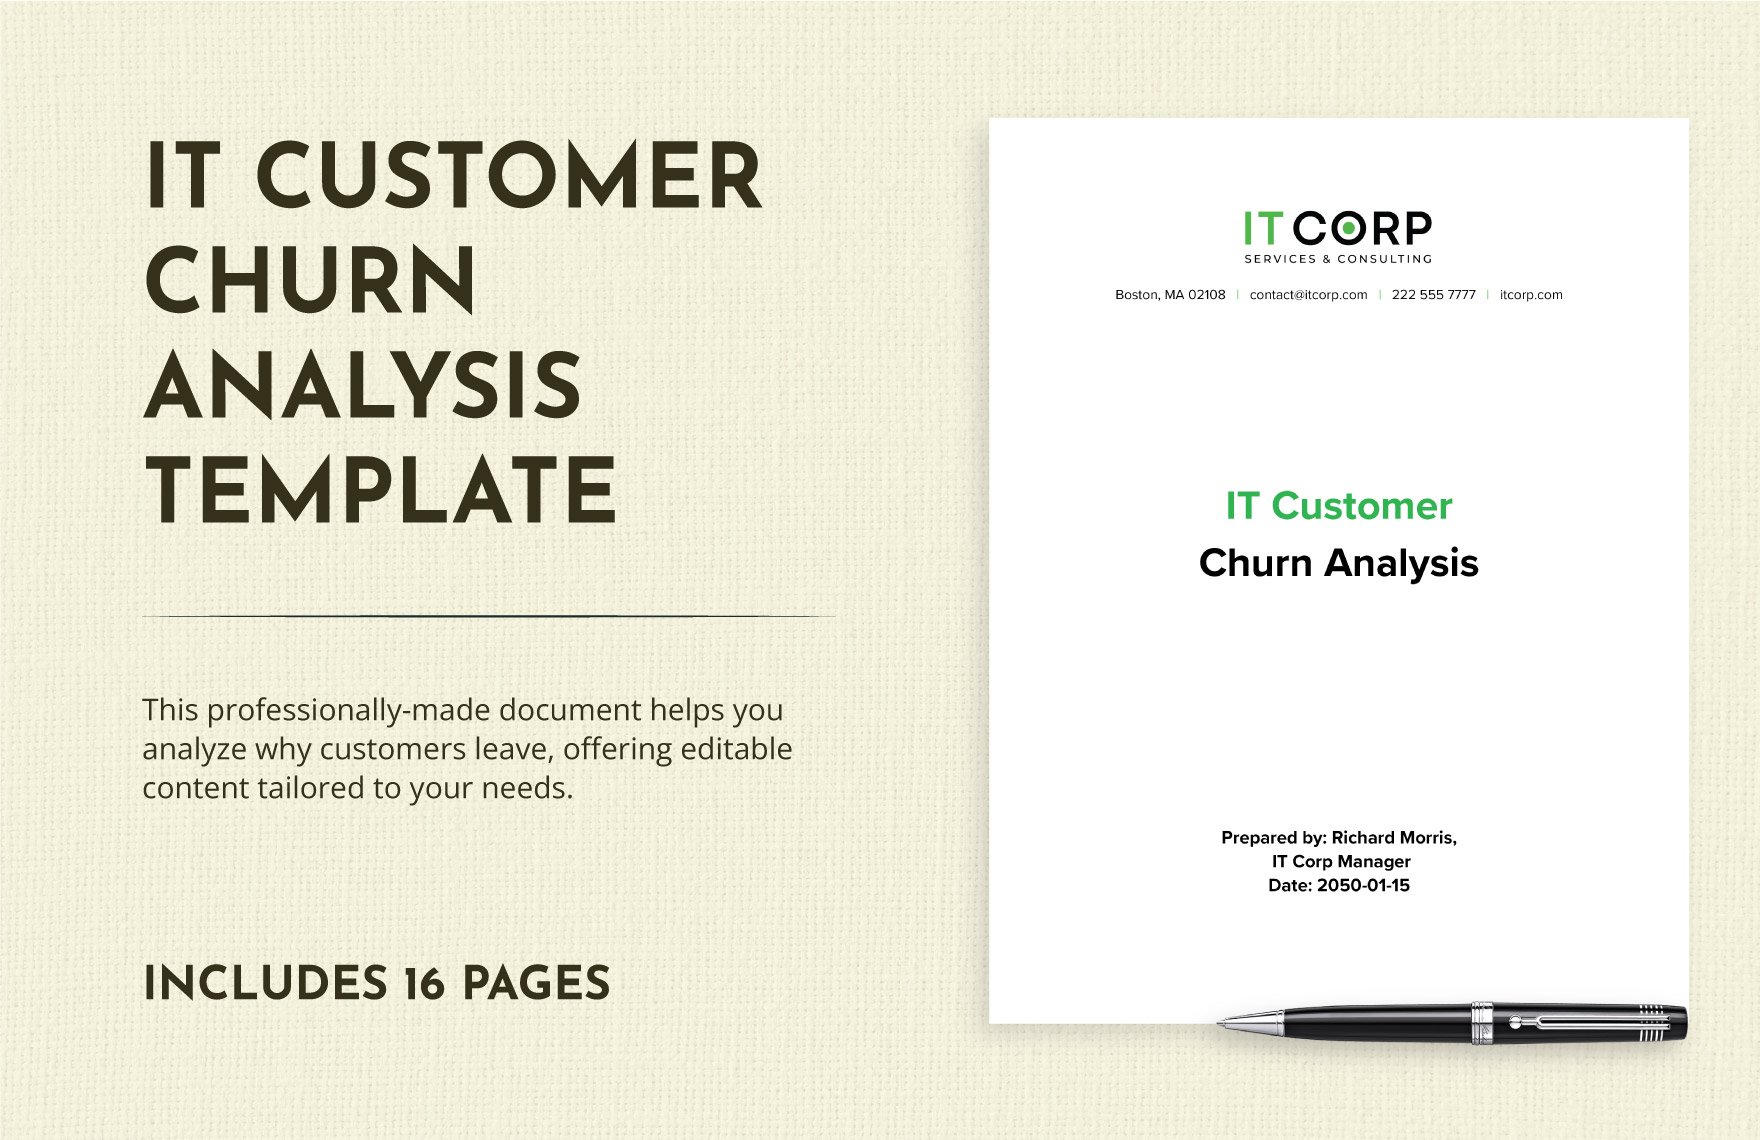 IT Customer Churn Analysis Template